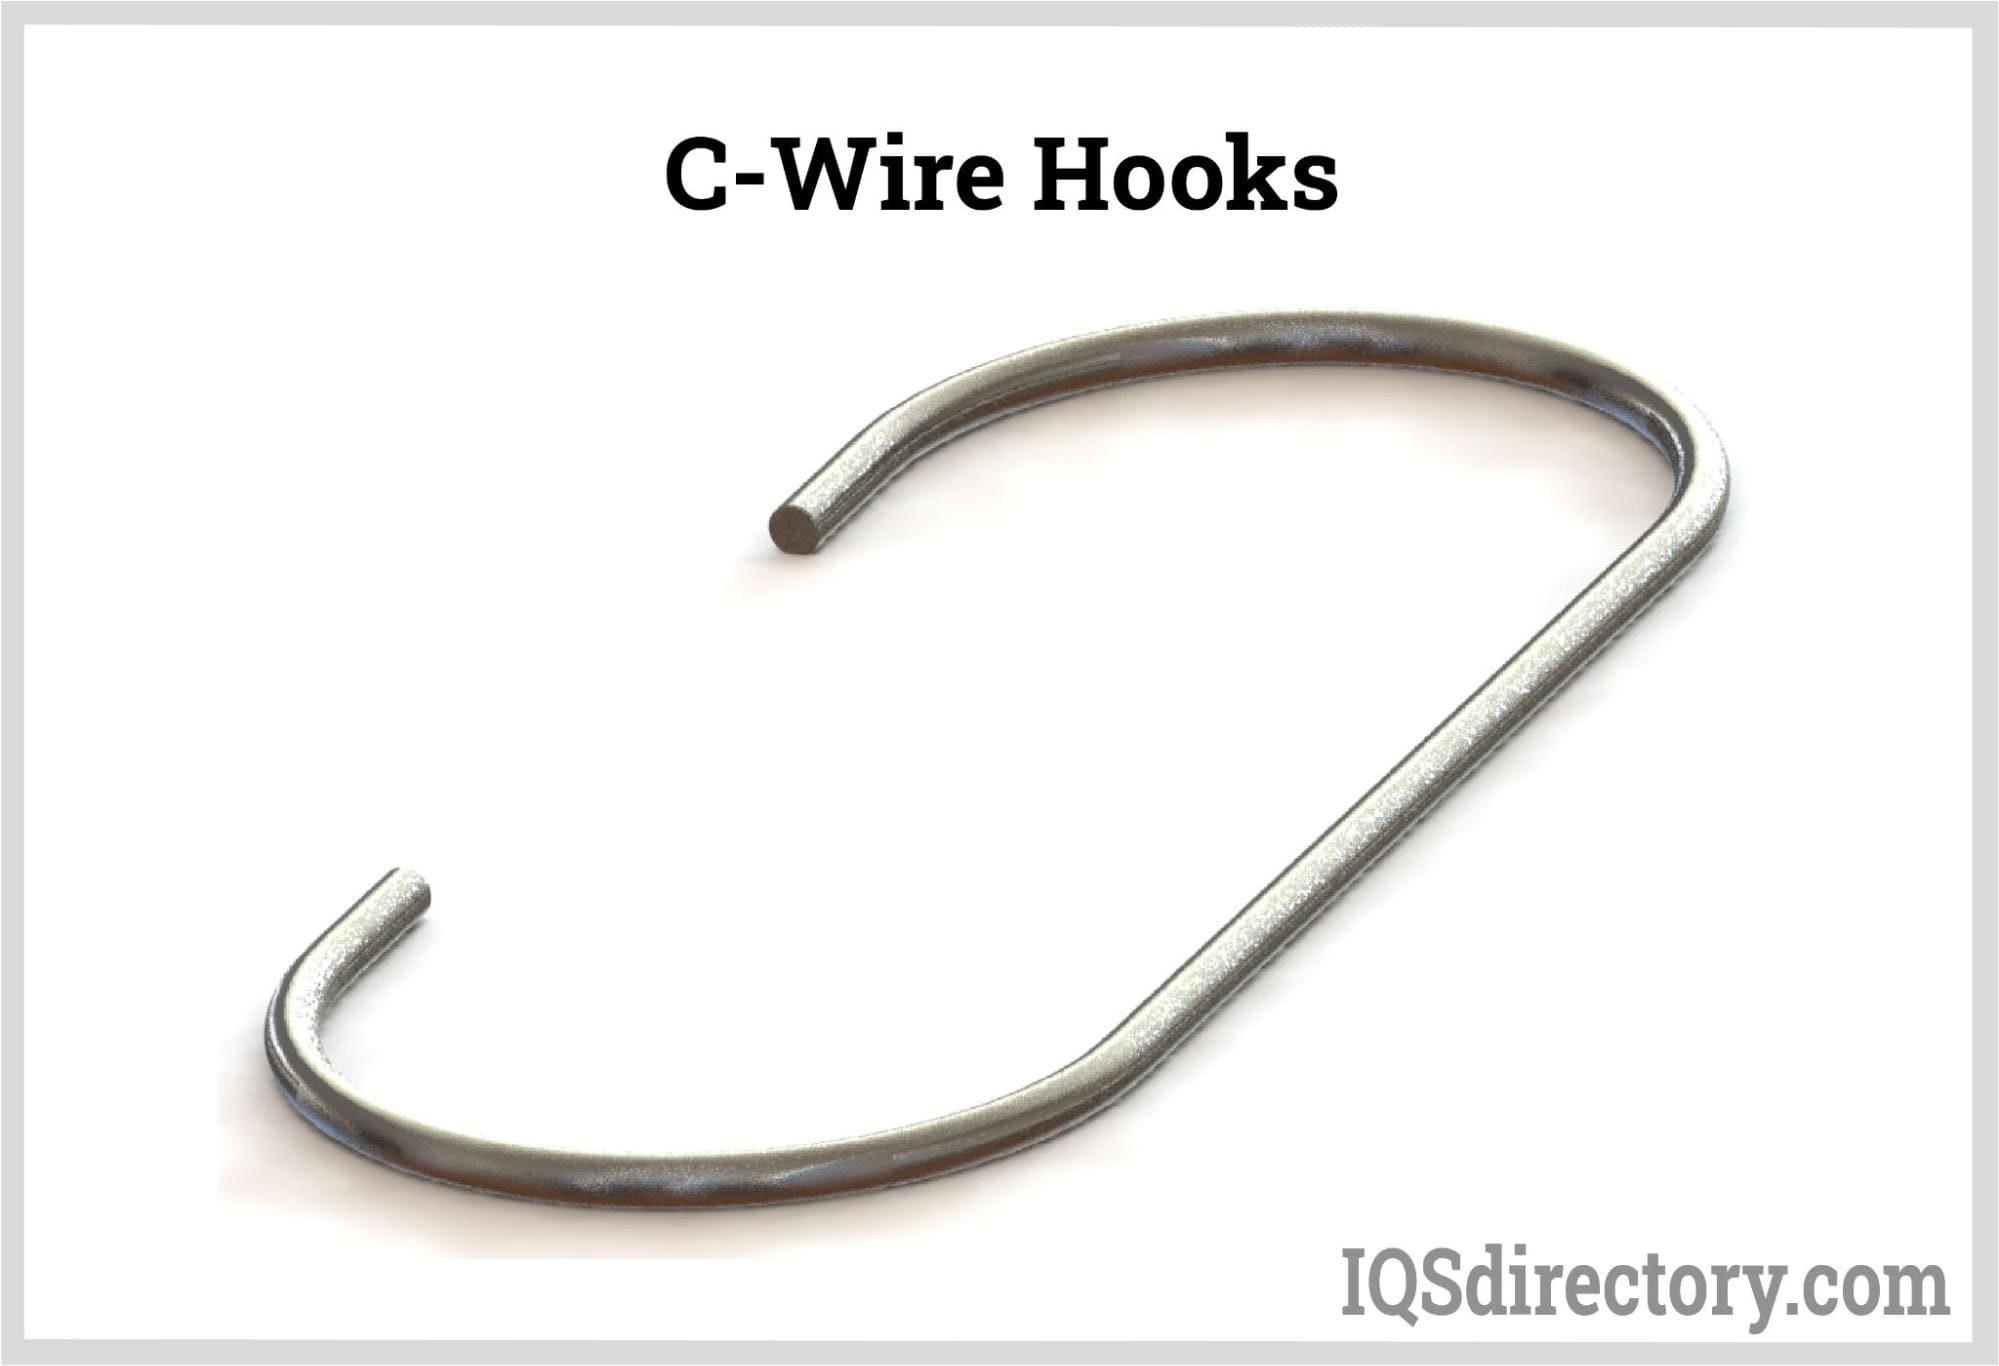 C-Wire Hooks